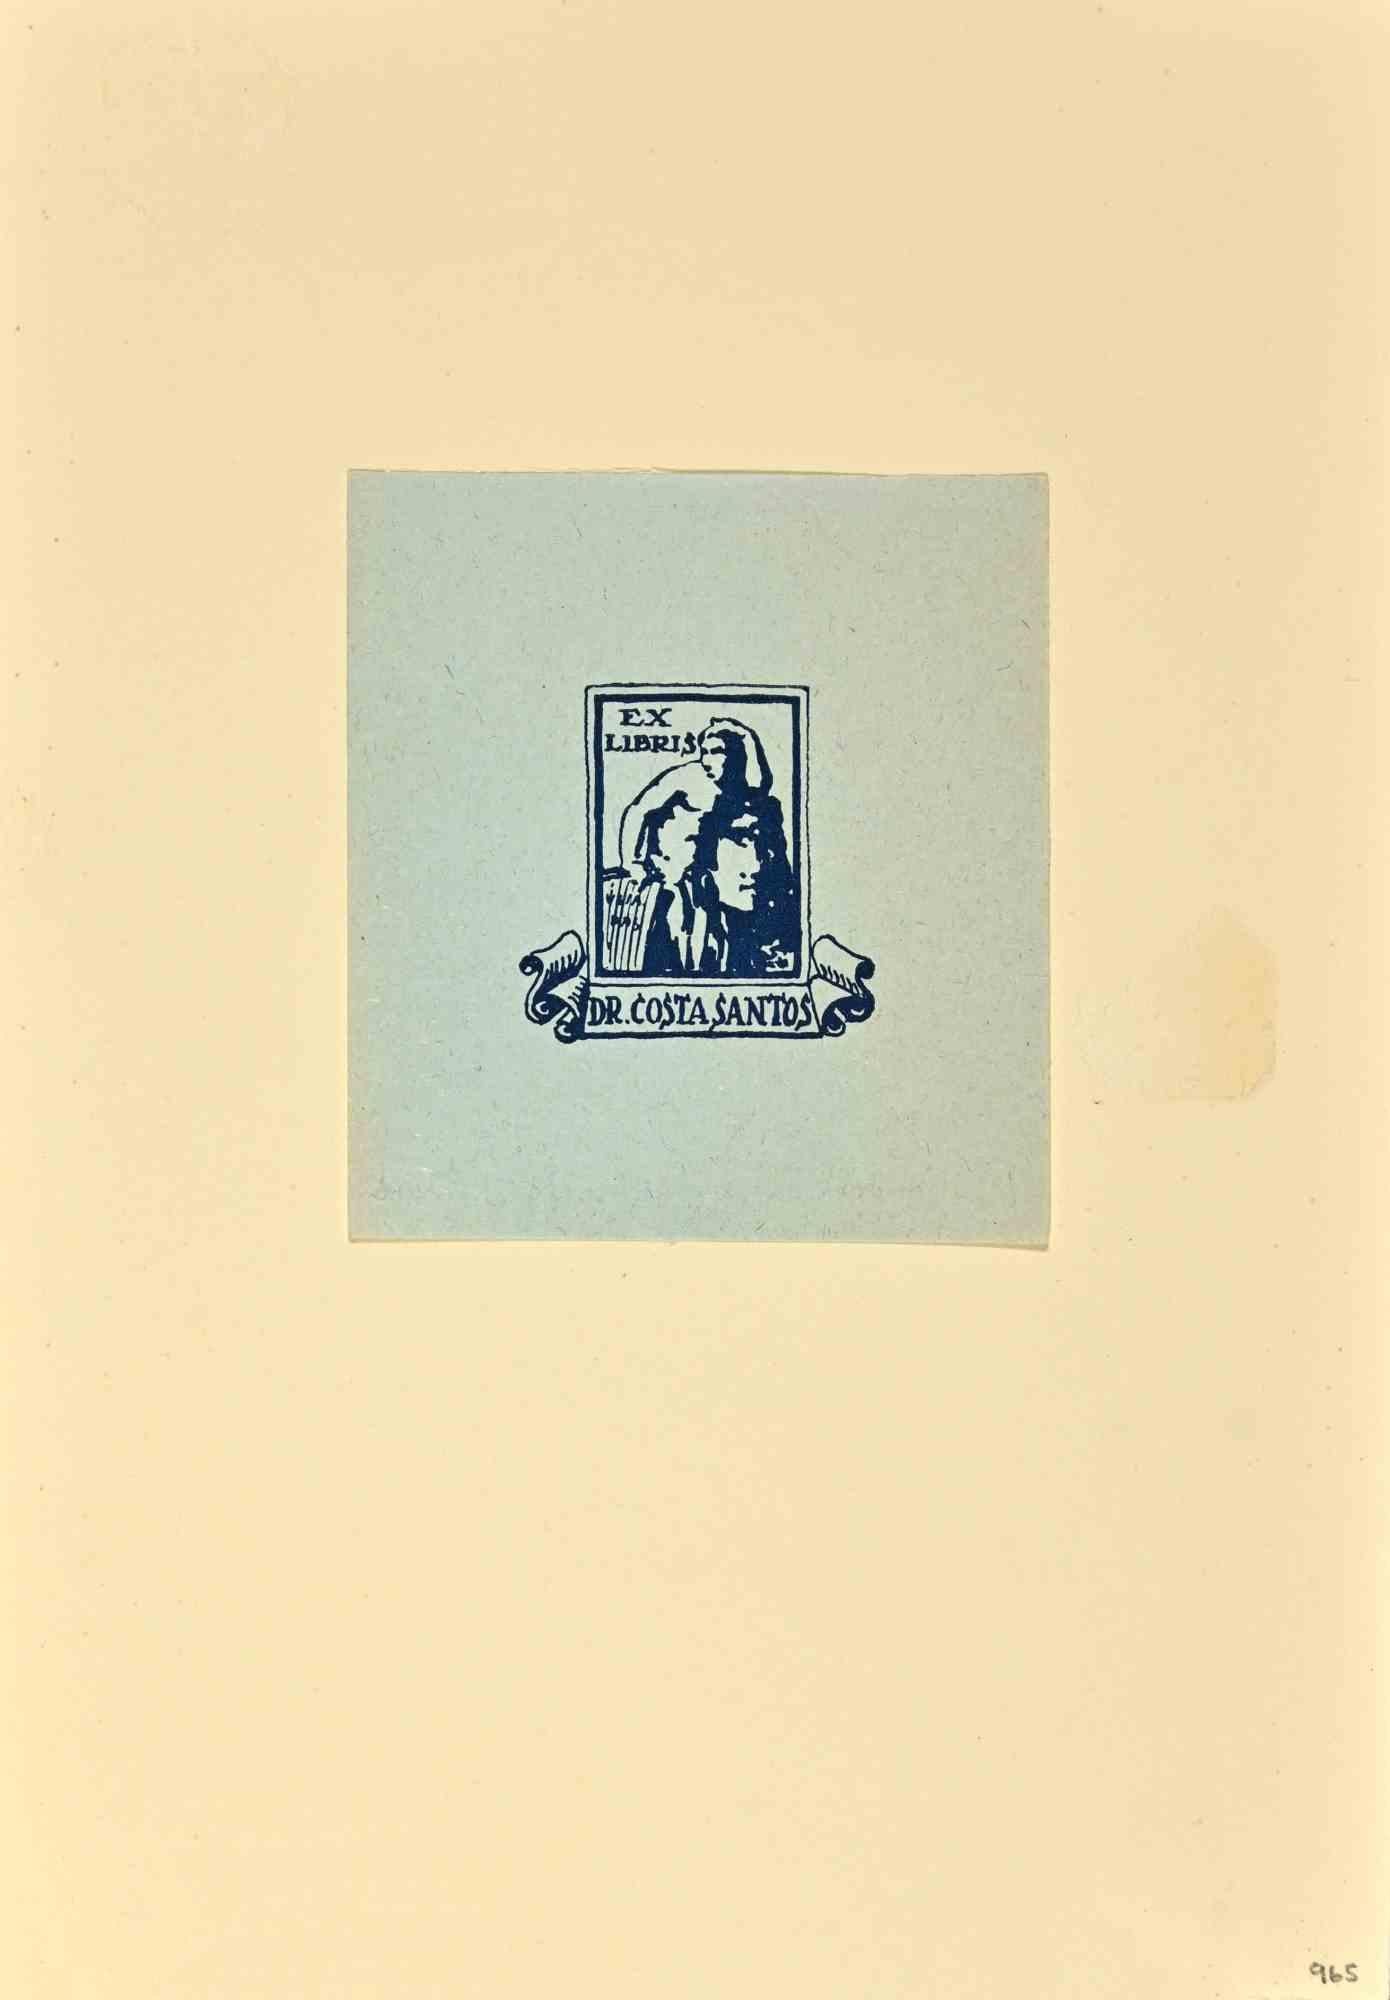  Ex Libris - Dr. Costa Santos - Woodcut - Mid-20th Century - Art by Unknown